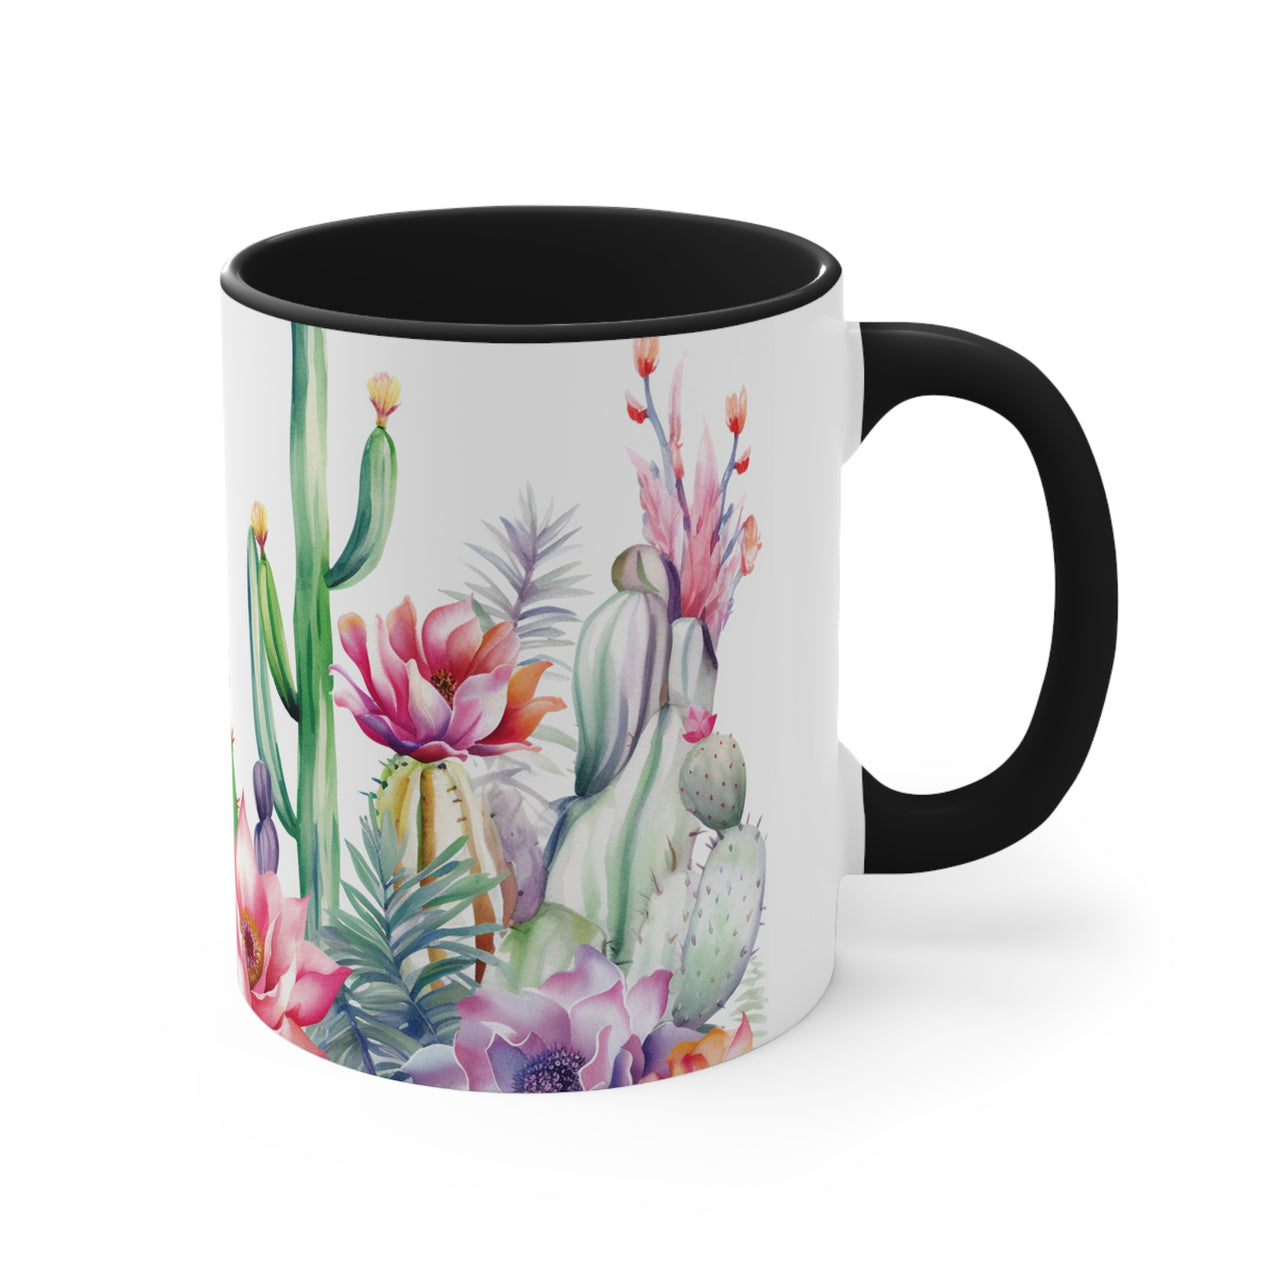 Cactus Mug - Succulent Mug - Cacti Coffee Mug - Cactus Lover Gift